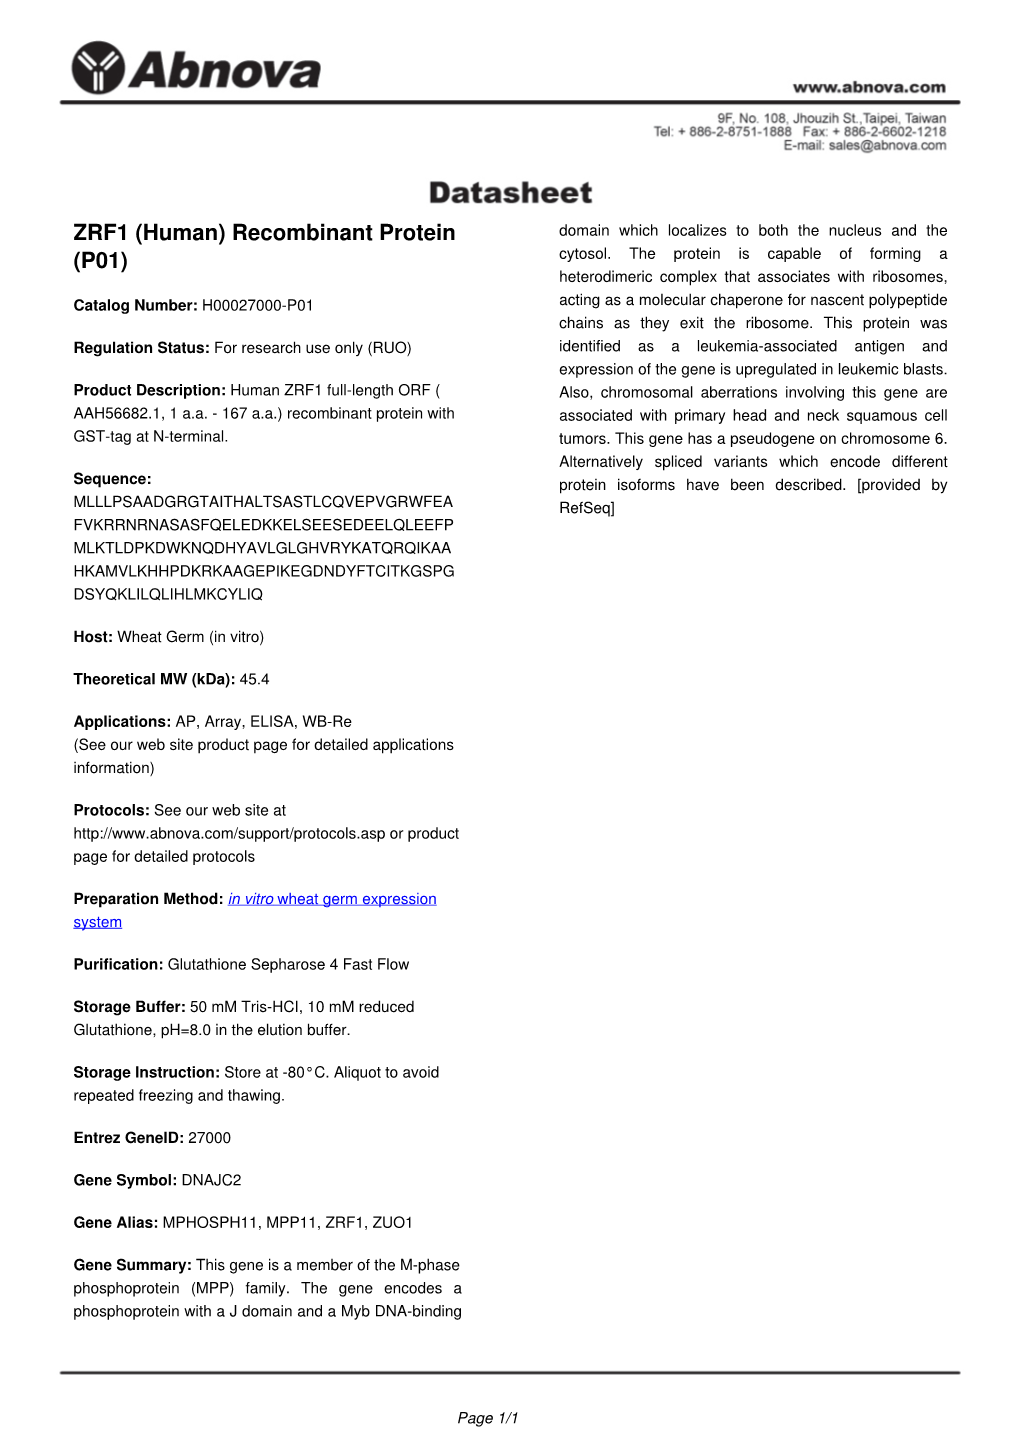 ZRF1 (Human) Recombinant Protein (P01)